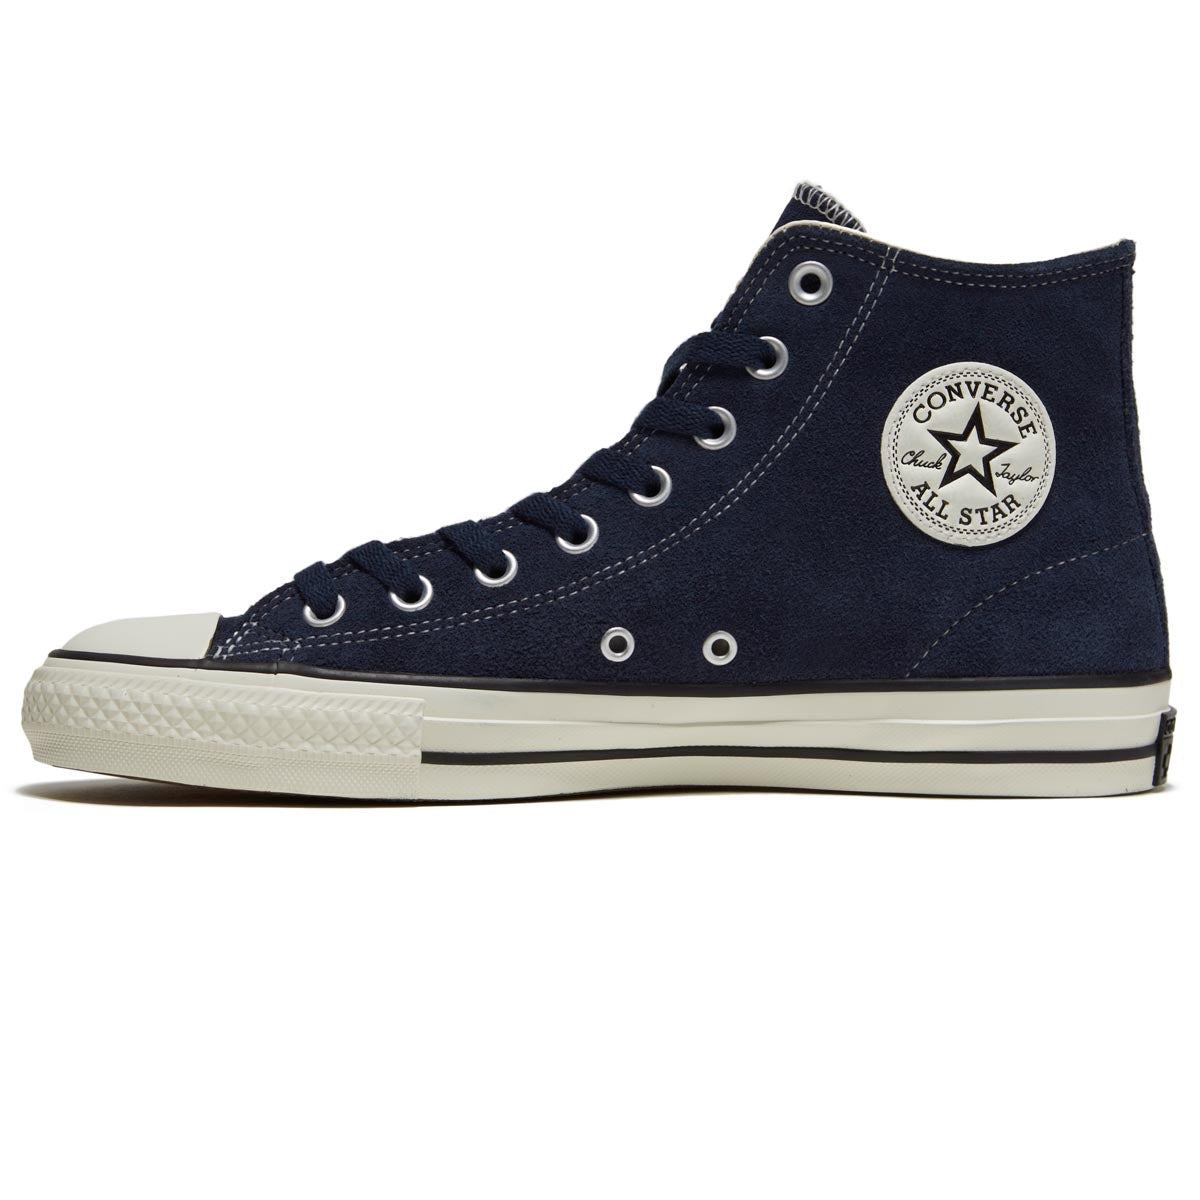 Converse Chuck Taylor All Star Pro Suede Hi Shoes - Navy/Egret/Black image 2